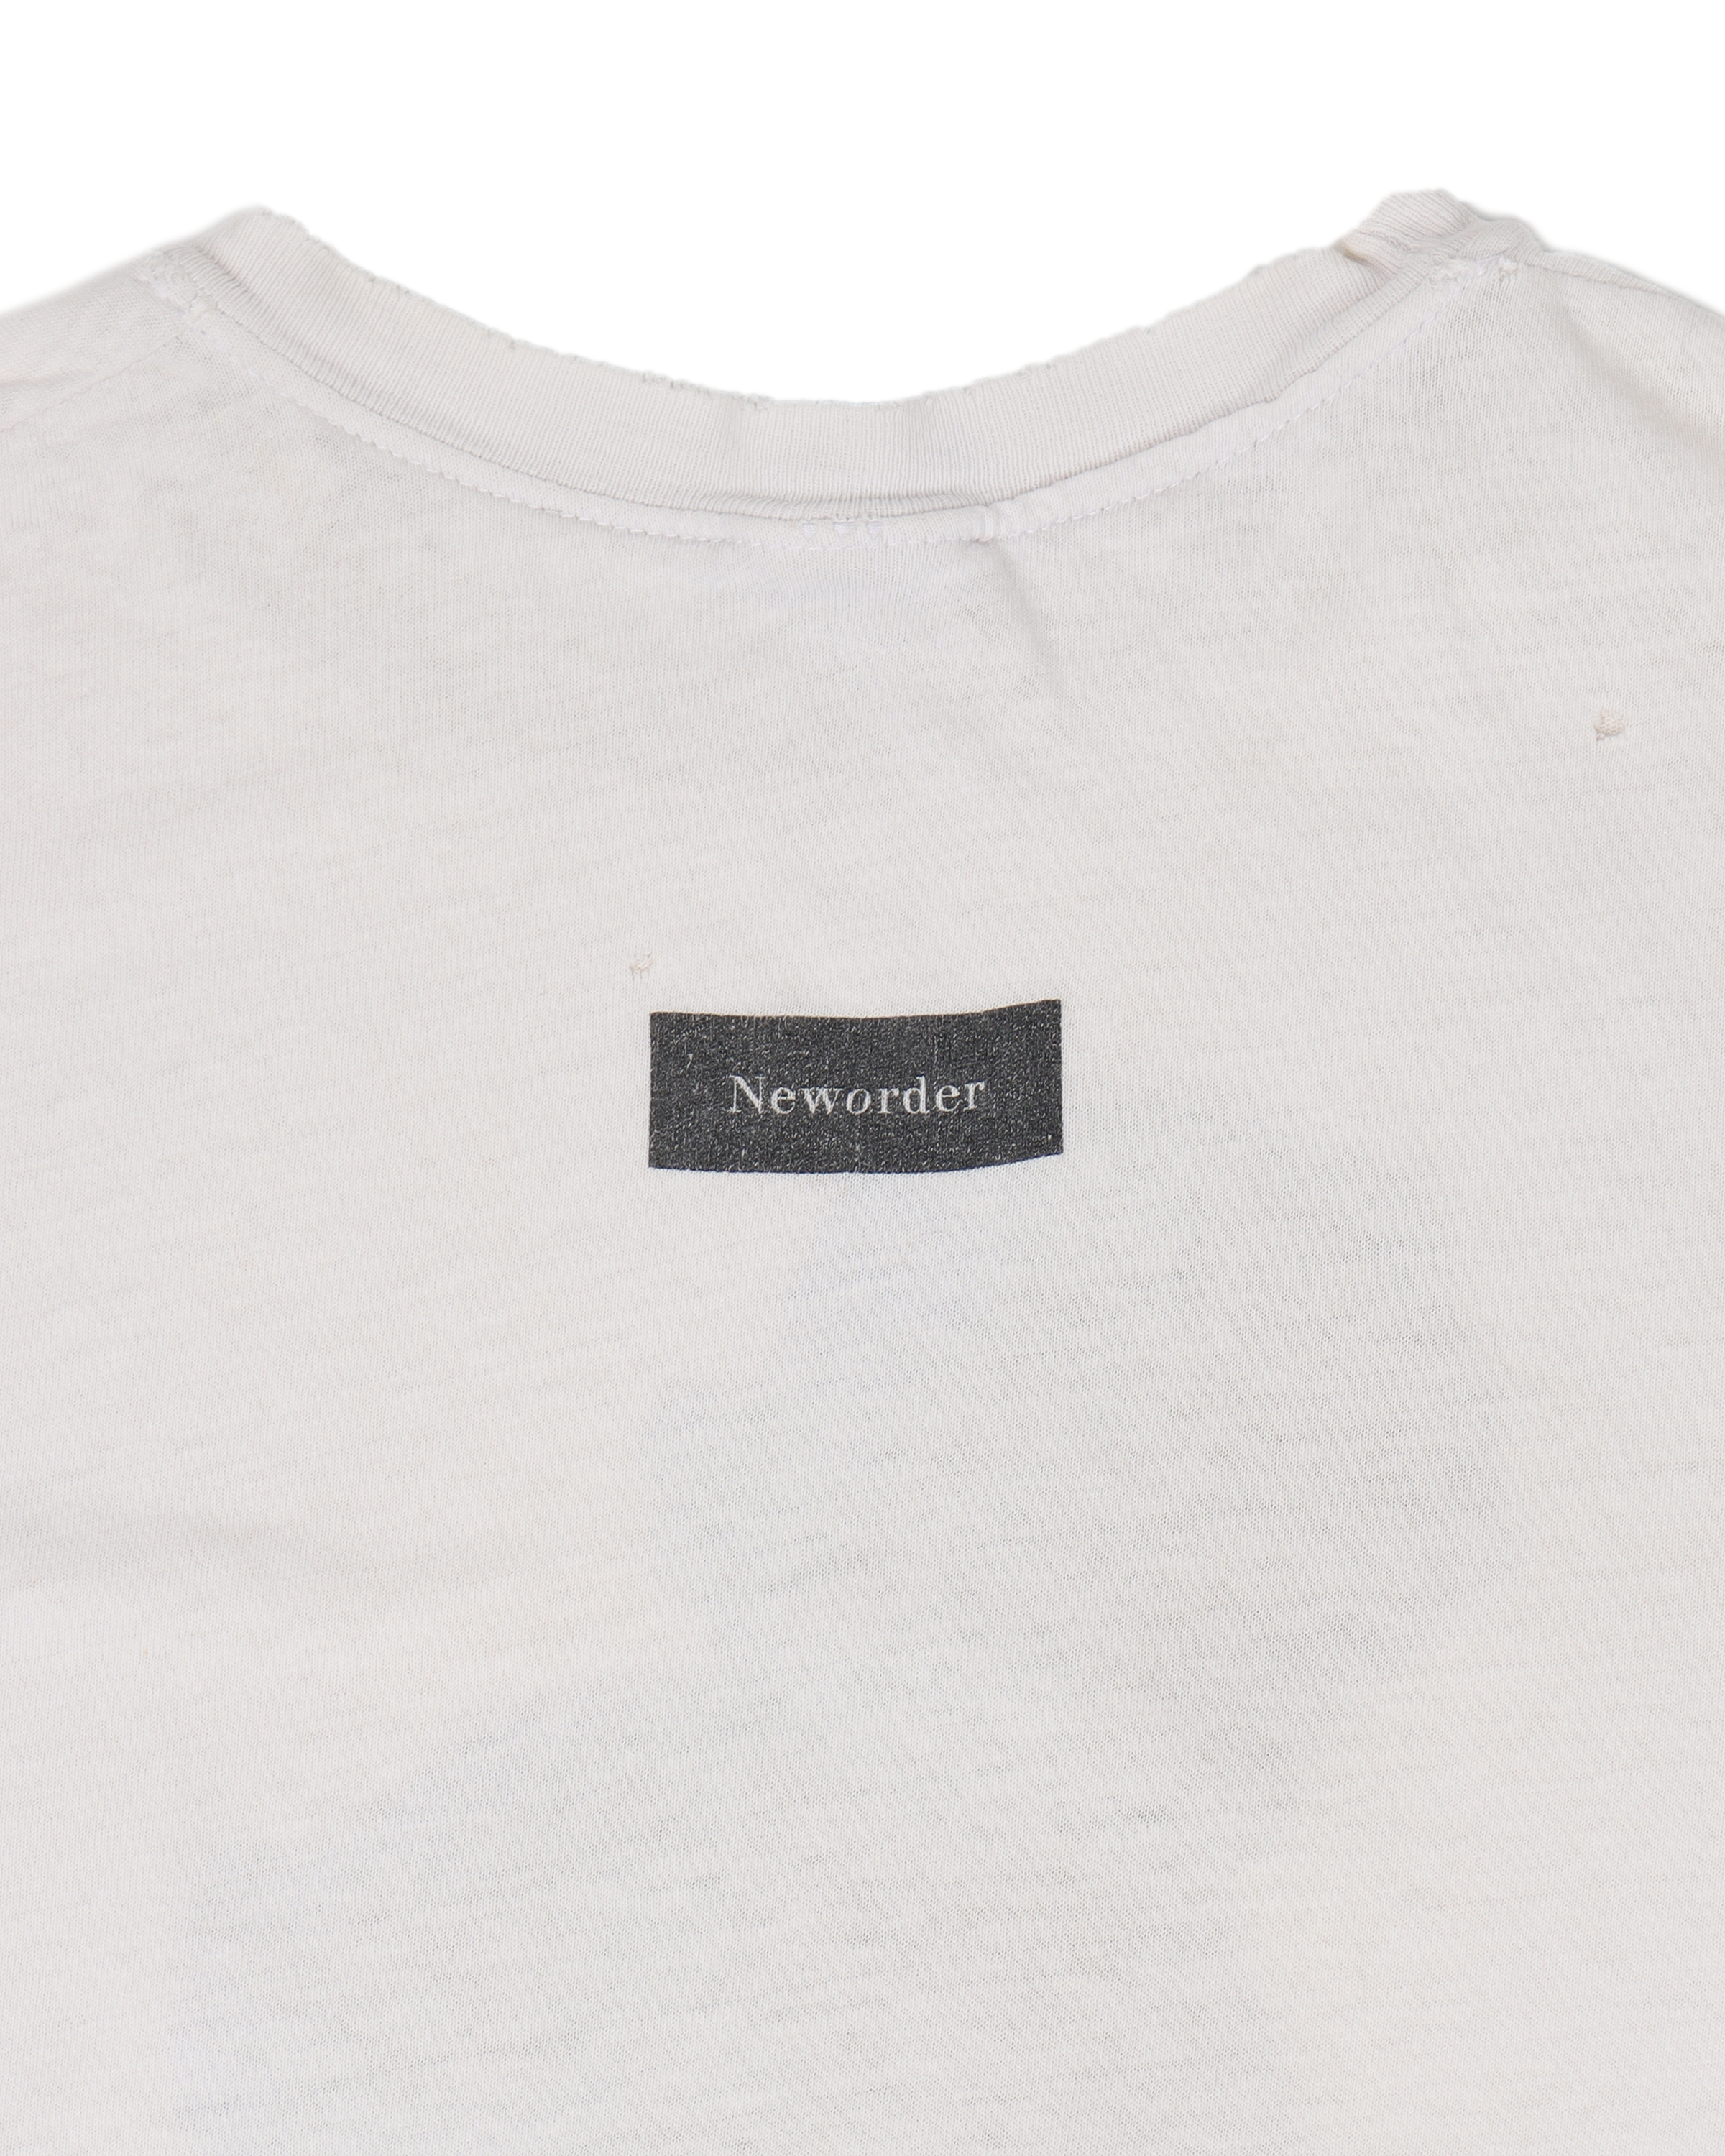 New Order 'Technique' T-Shirt